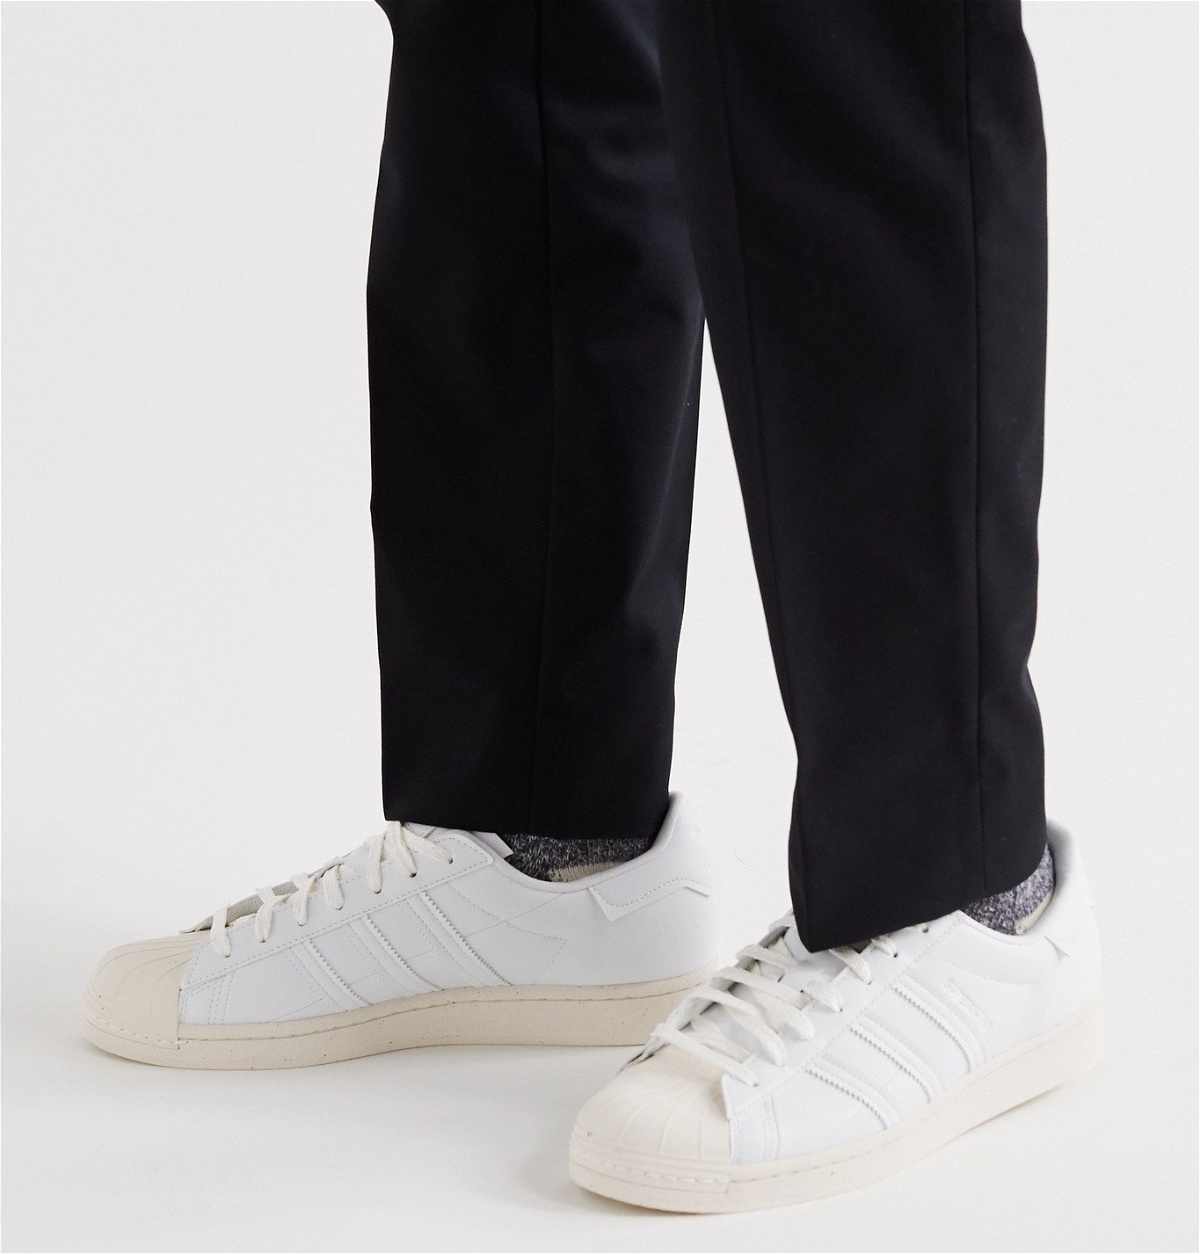 adidas Originals - Clean Wang Leather Originals White by - Vegan adidas Alexander Classics Superstar Sneakers